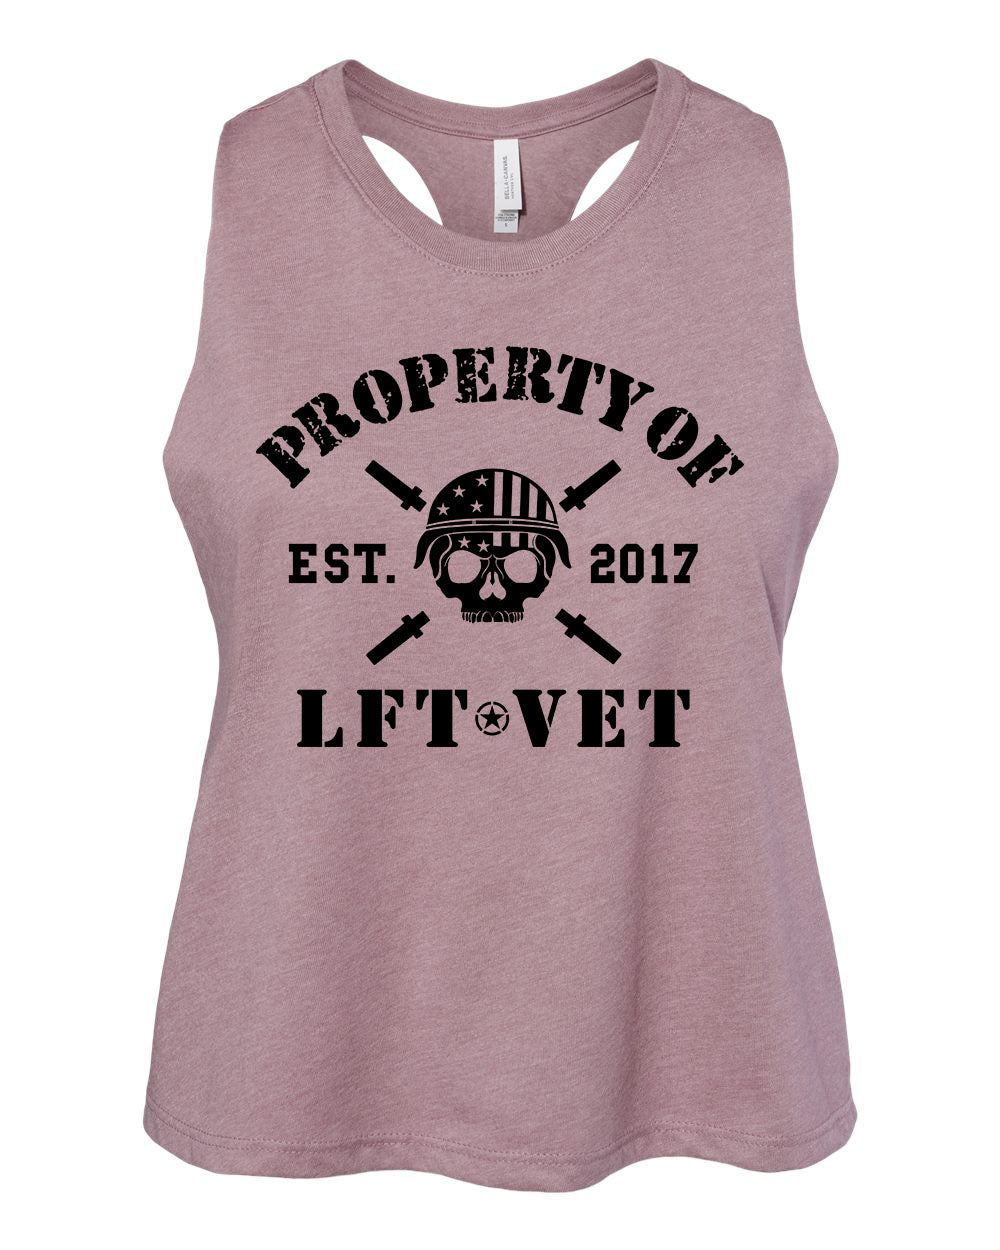 Property of LFTVET Racerback Cropped Tank